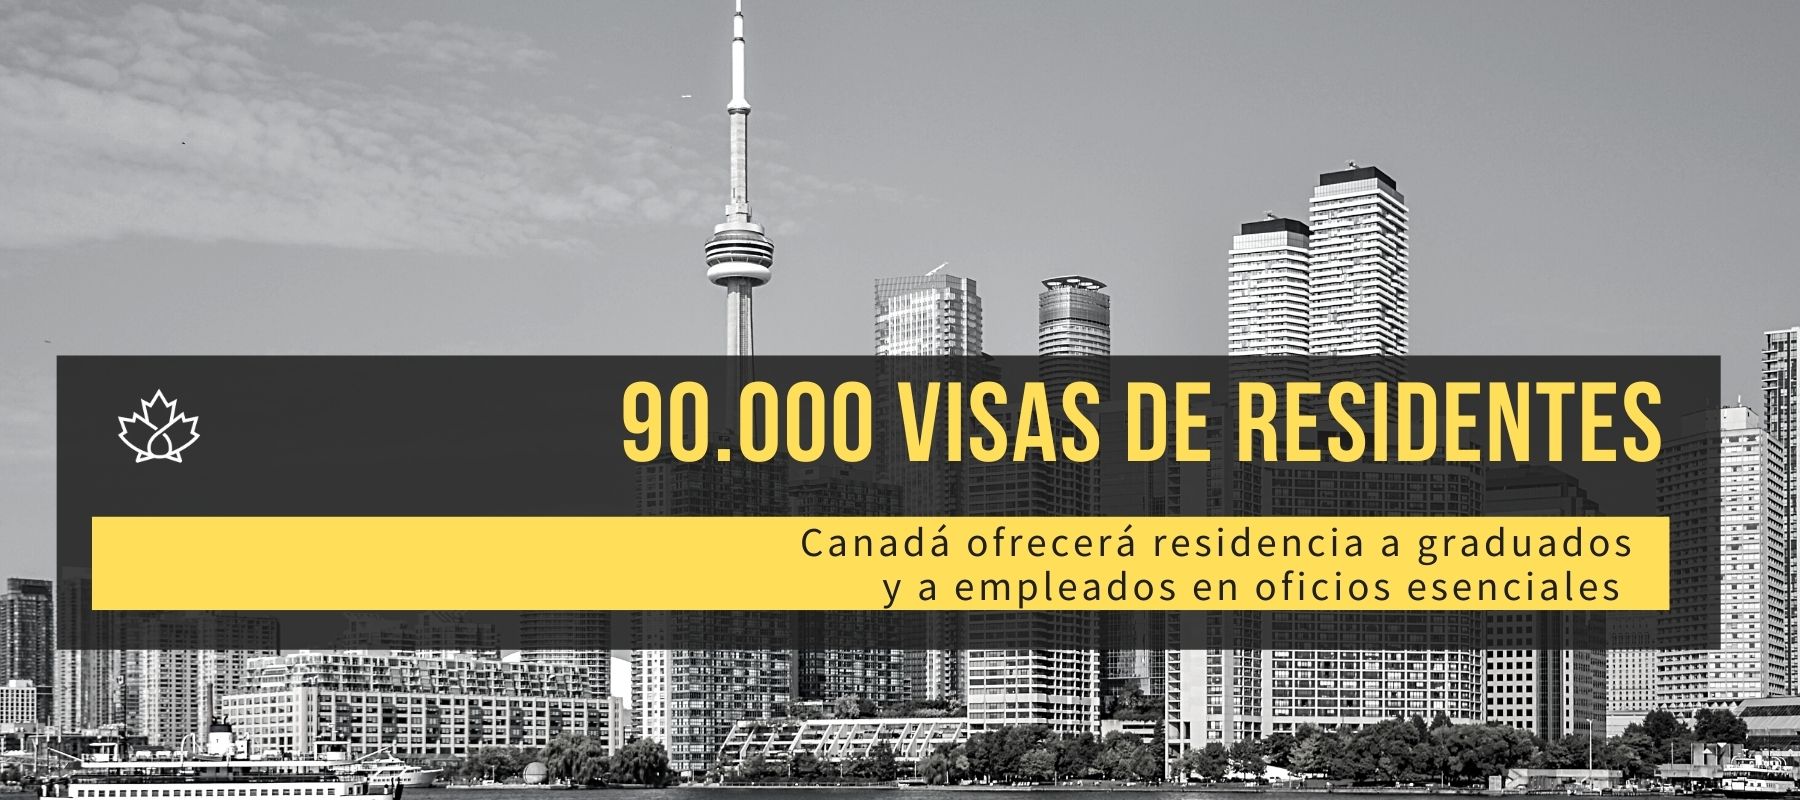 90.000 visas de residentes permanentes en Canada